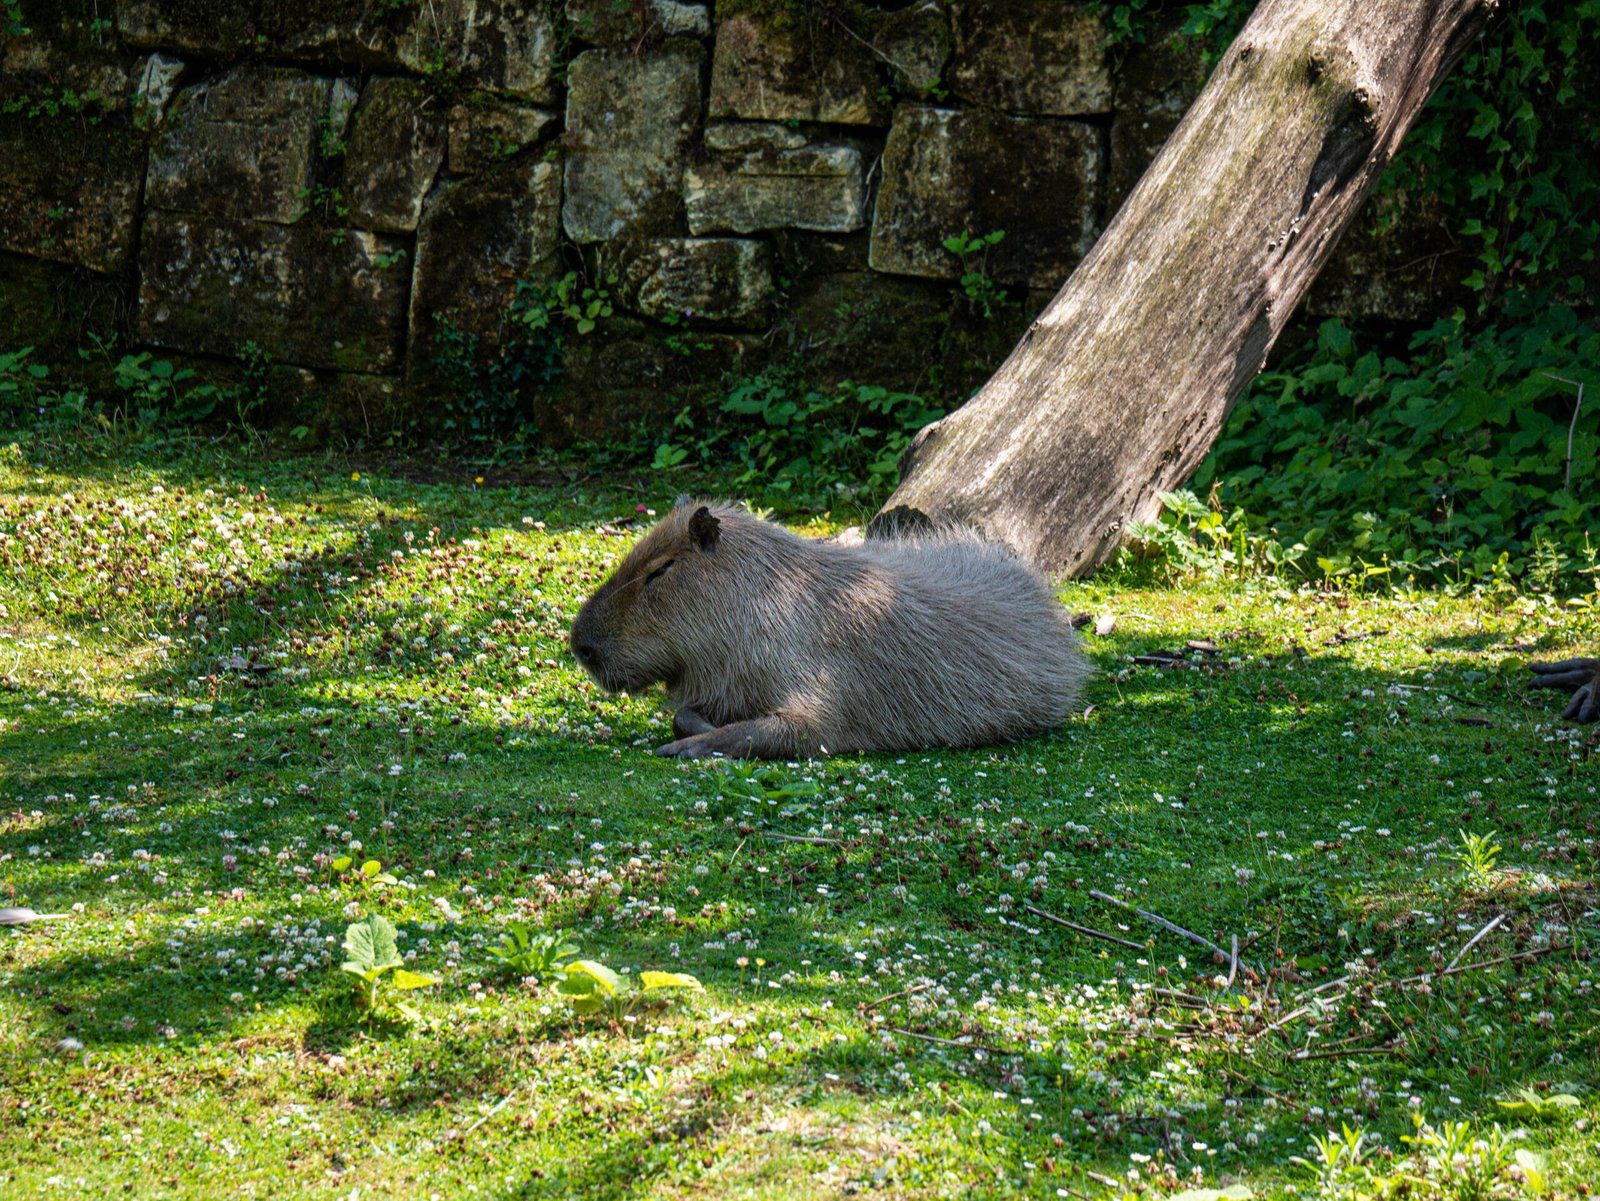 The Invasion of Capybaras in Argentina